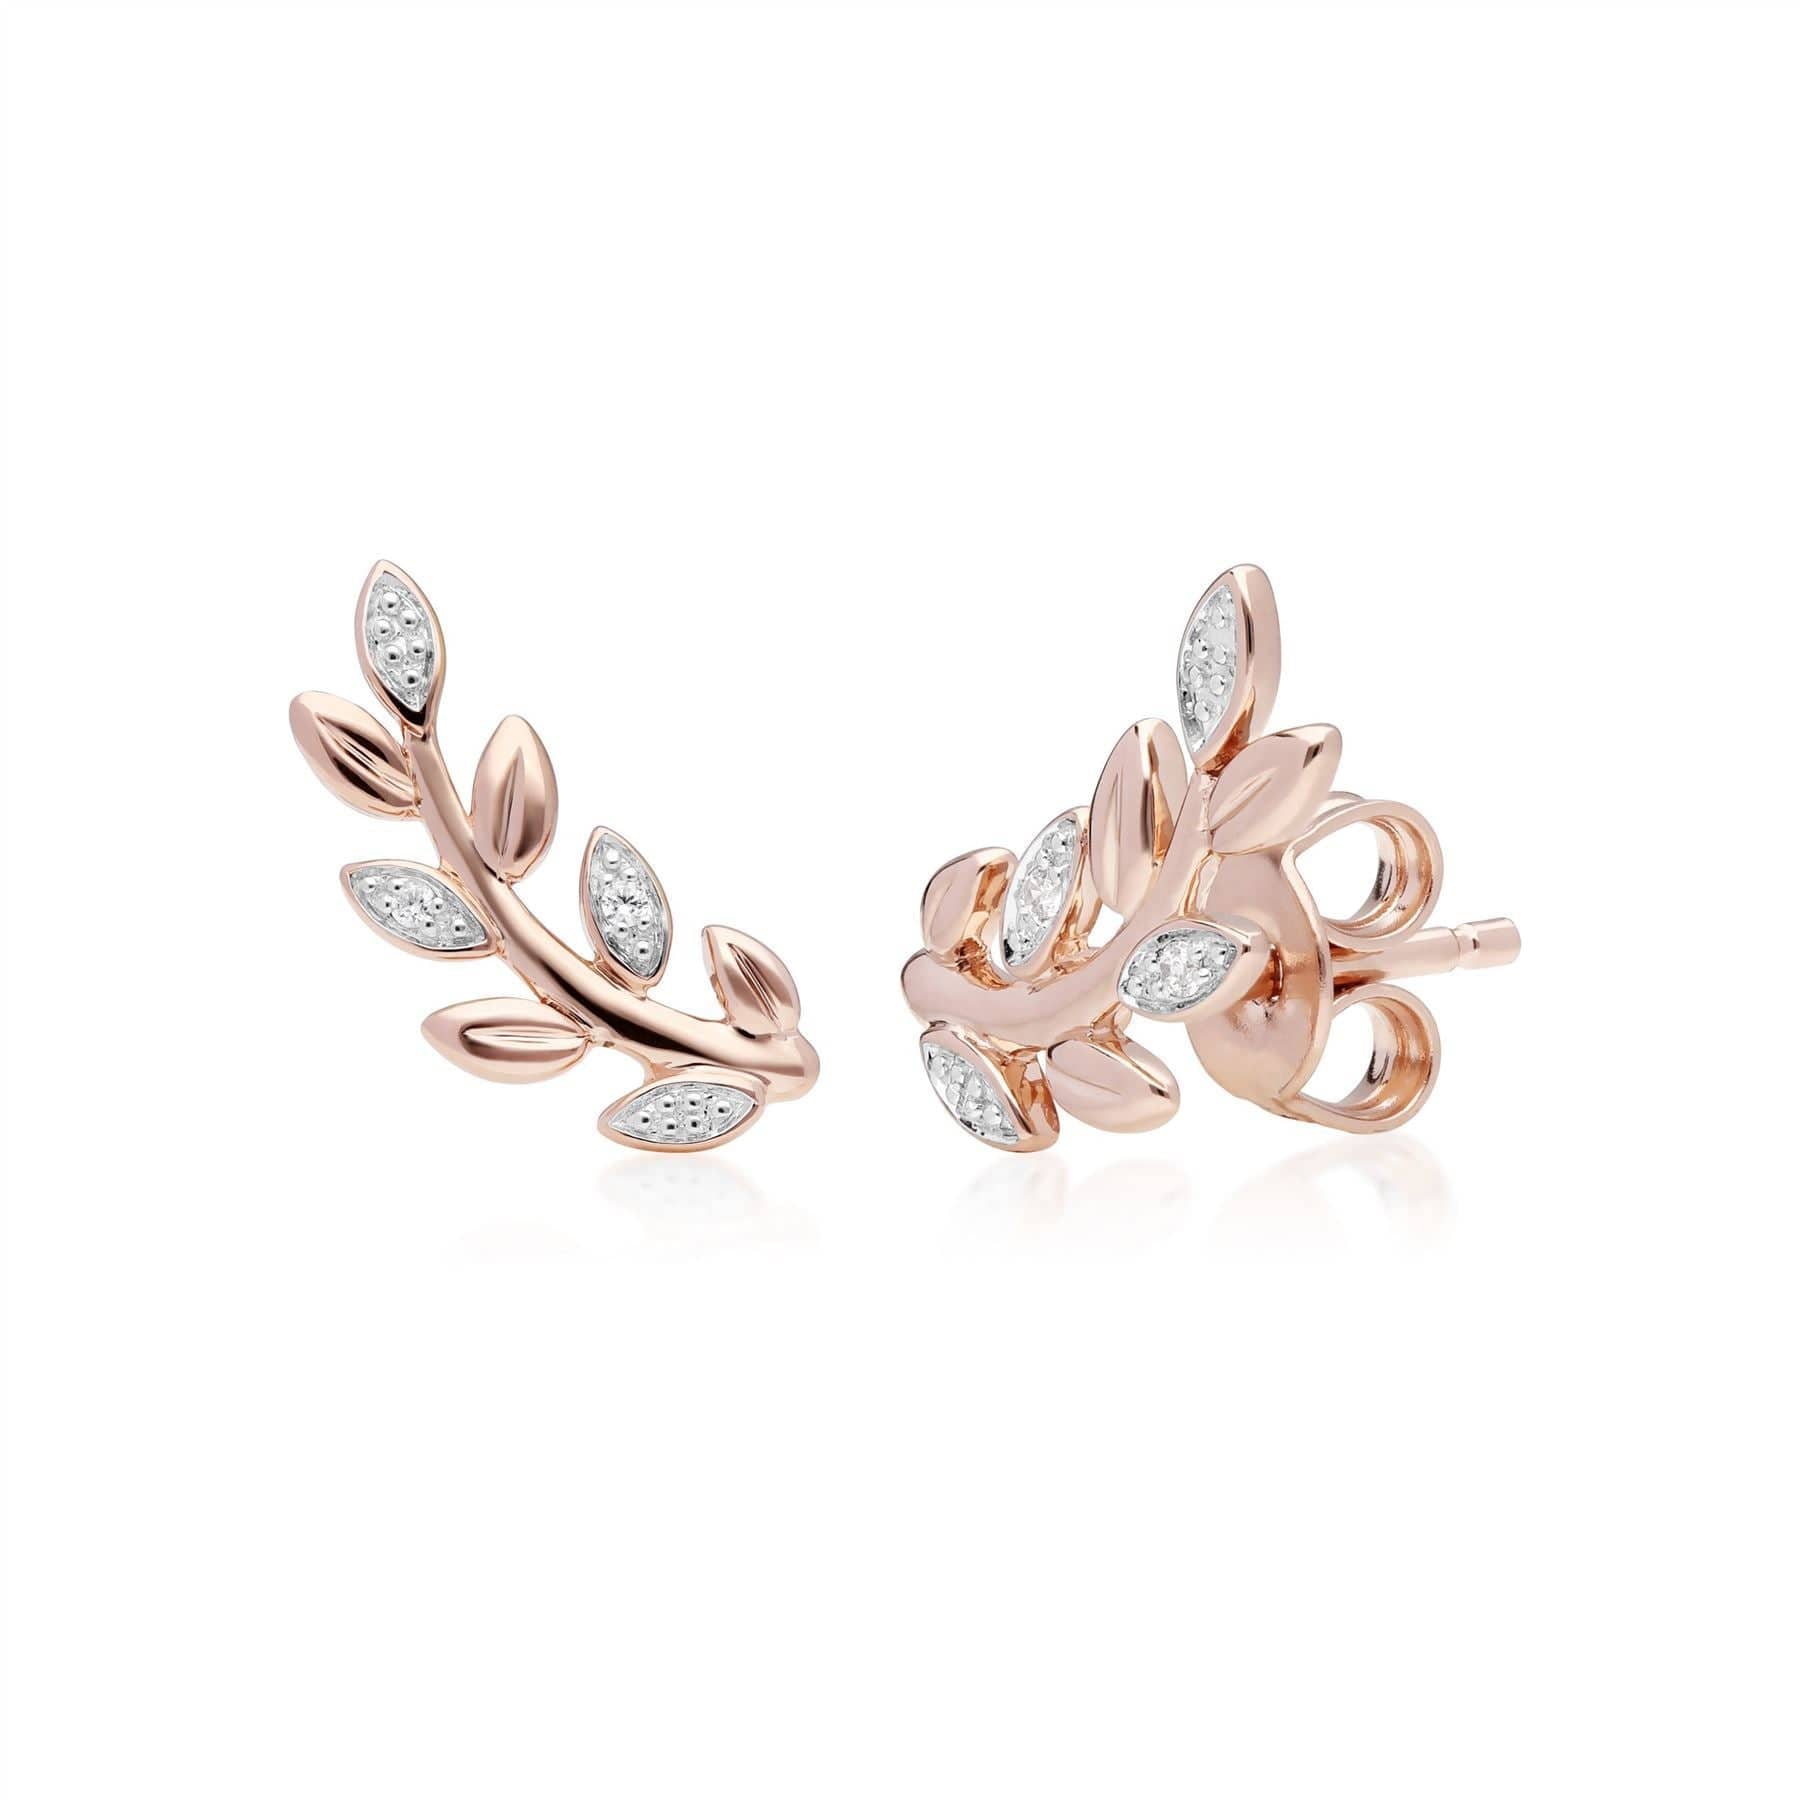 191E0390029-191R0899029 O Leaf Diamond Stud Earring & Ring Set in 9ct Rose Gold 4